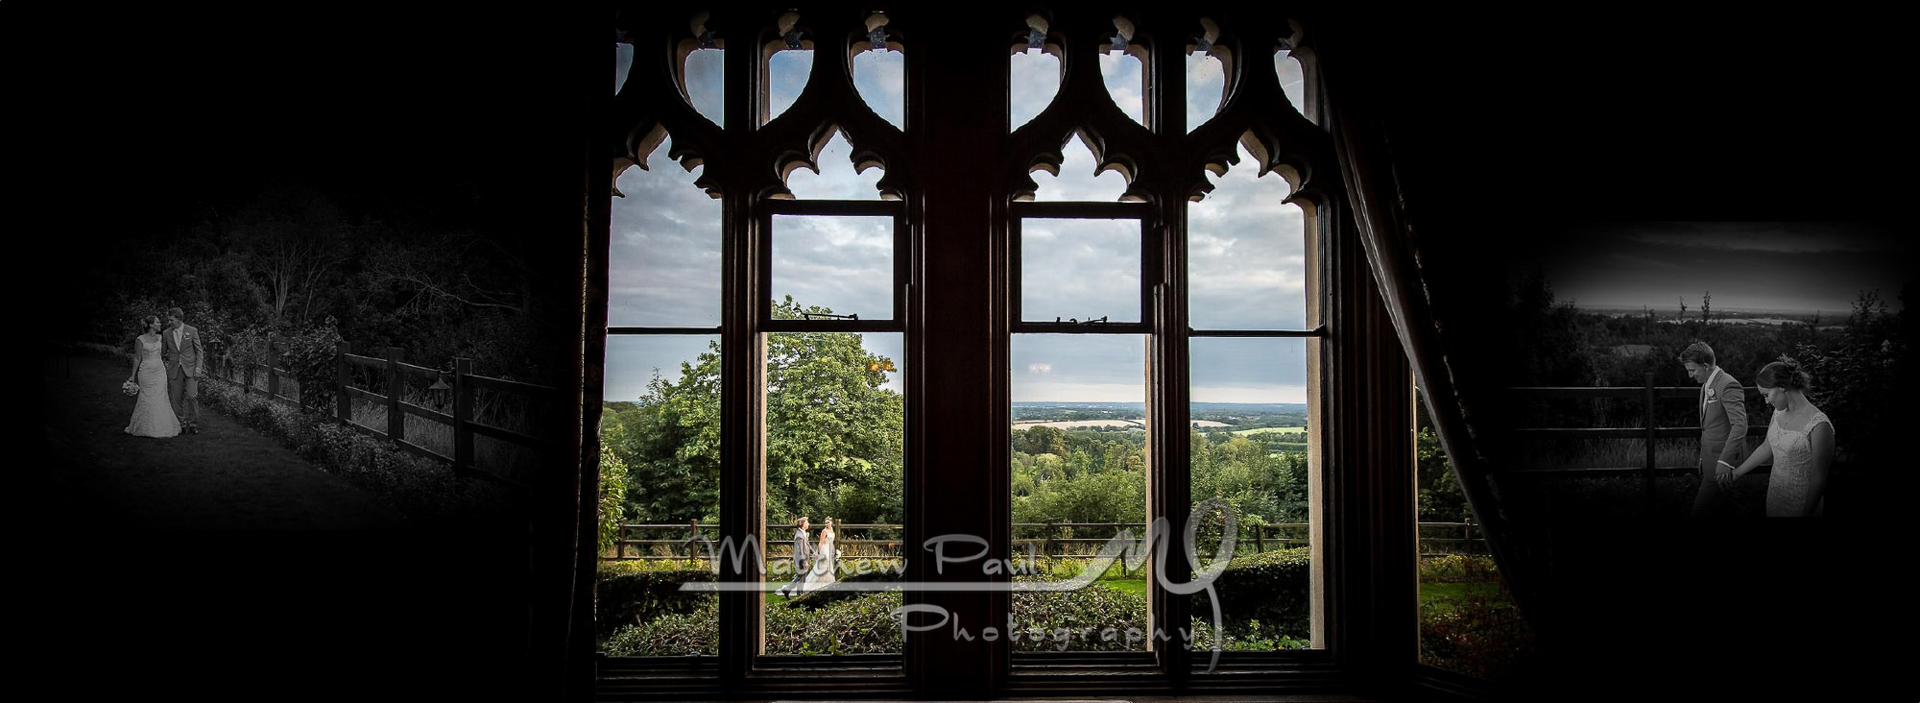 Nutifeld Priory, dramatic window with bride and groom